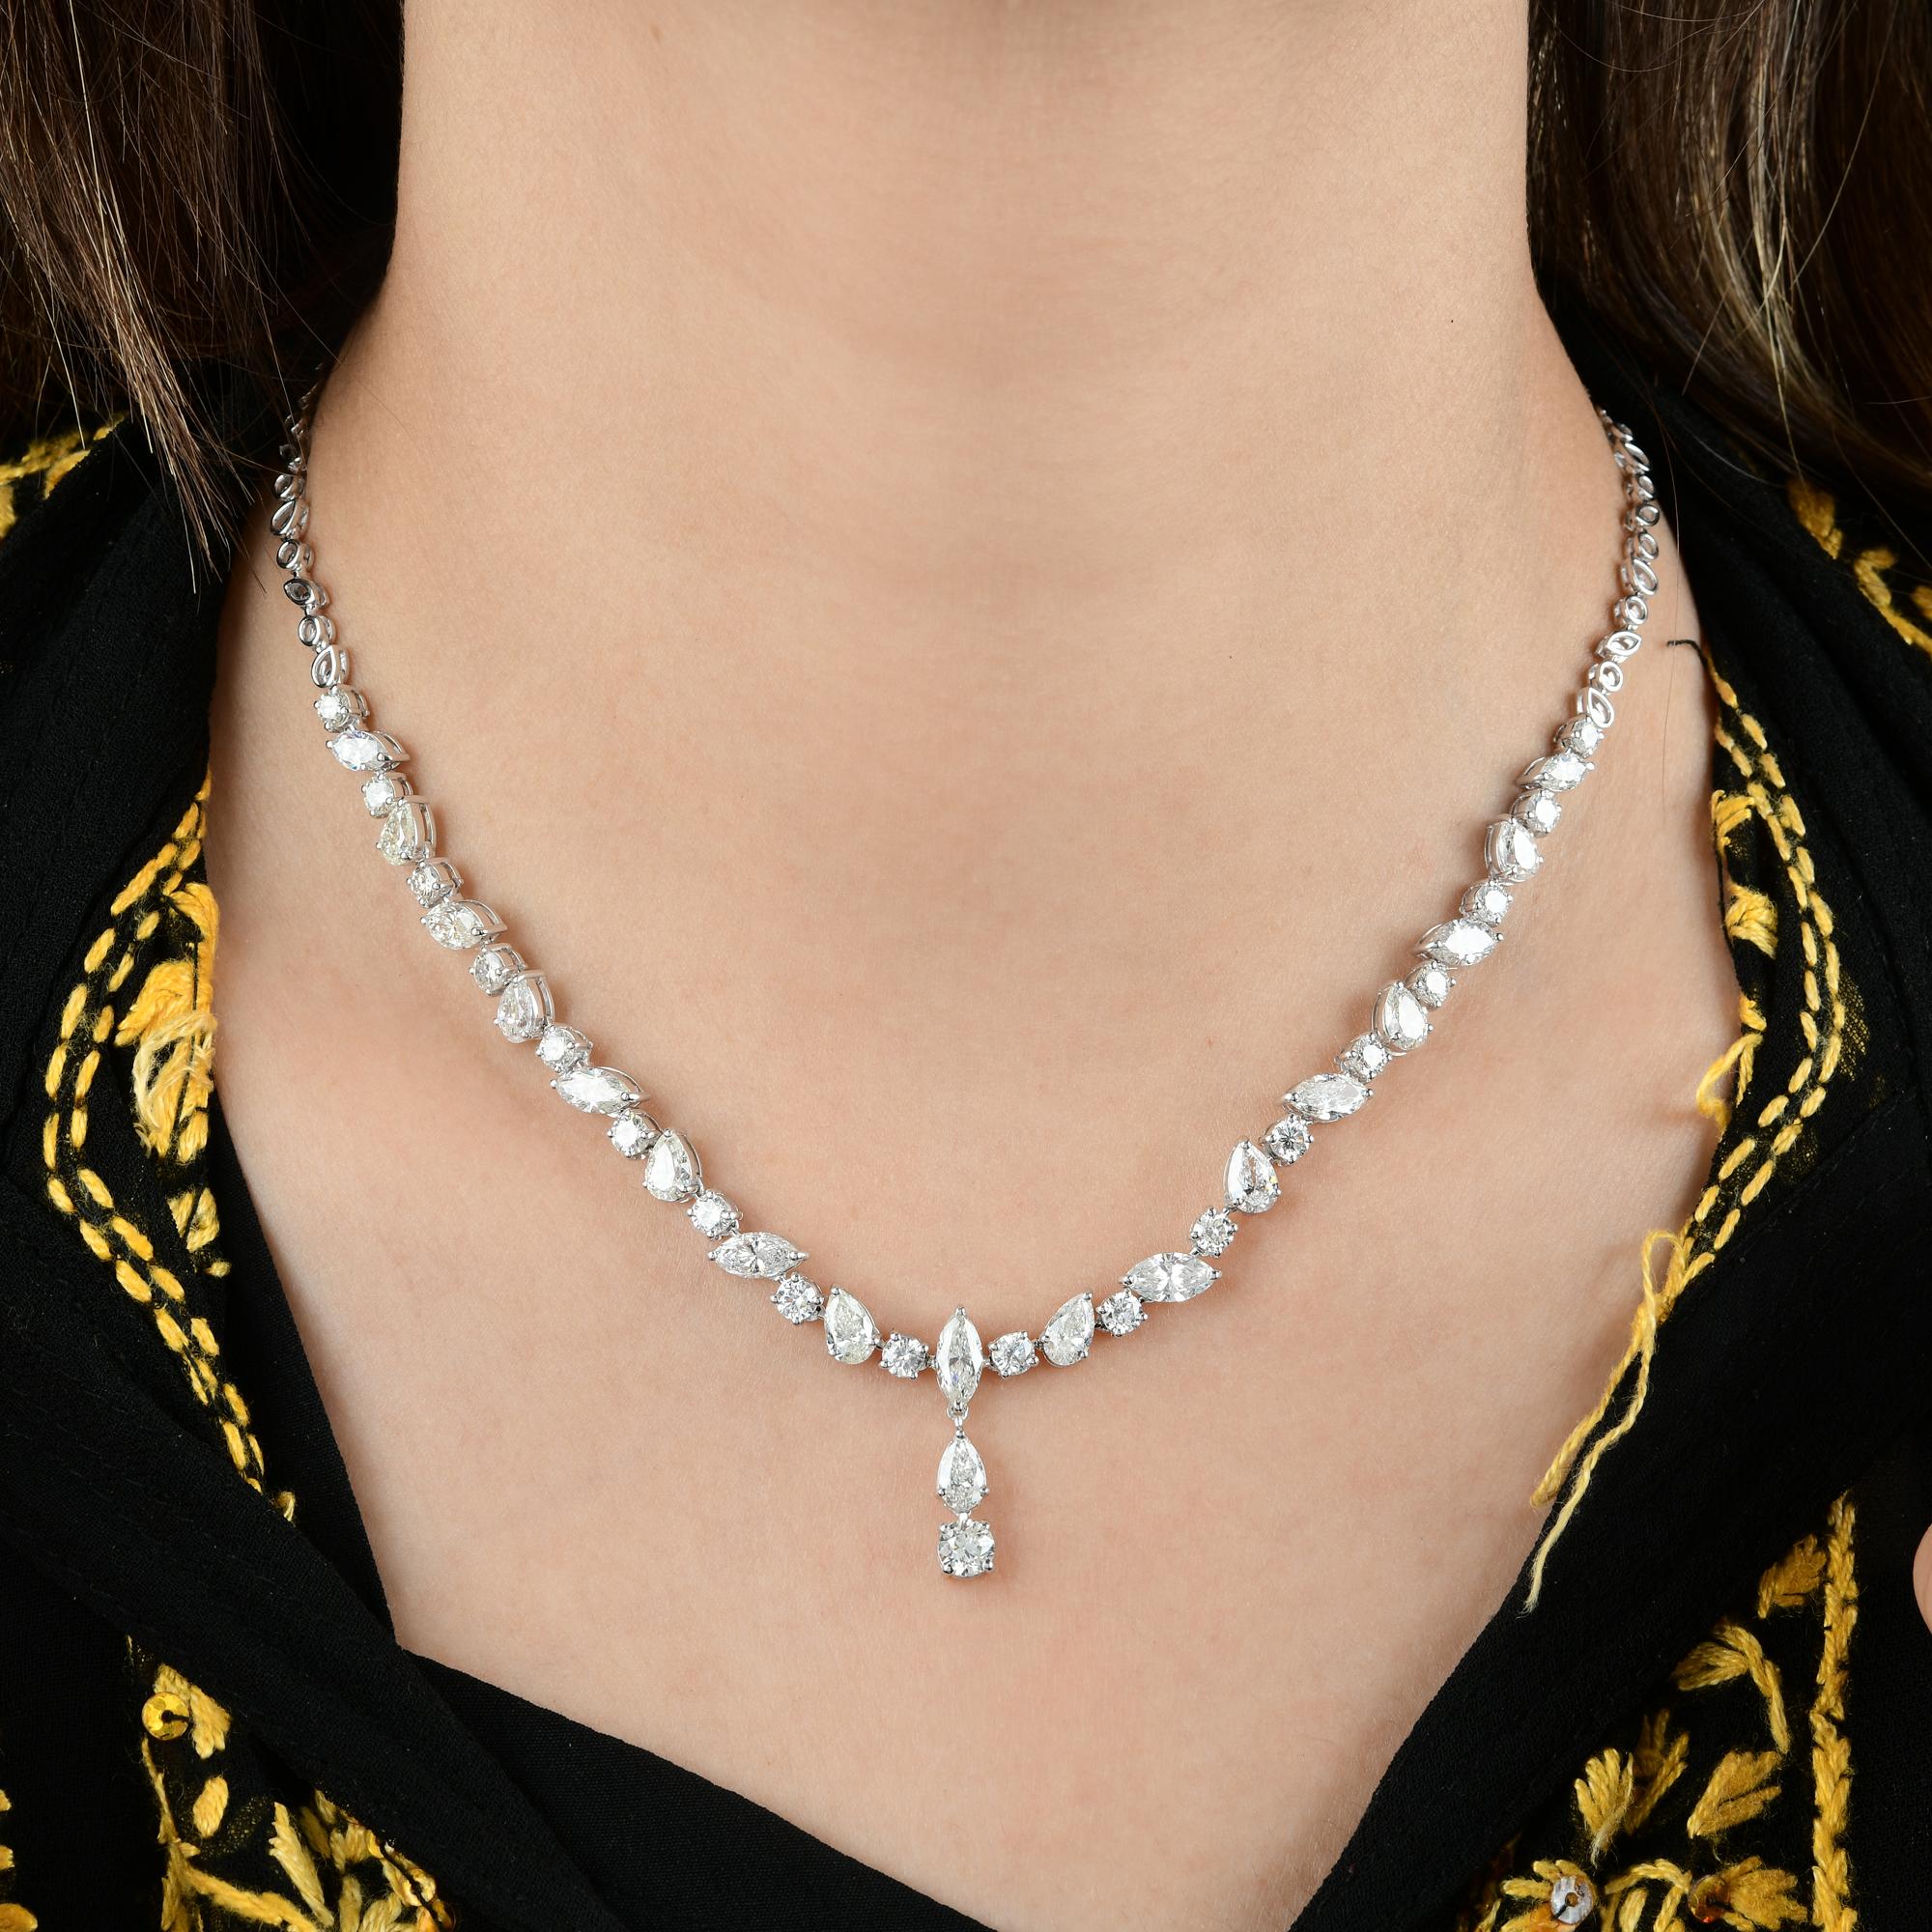 Round Cut 10.60 Carat SI Clarity HI Color Diamond Necklace 18 Karat White Gold Jewelry For Sale